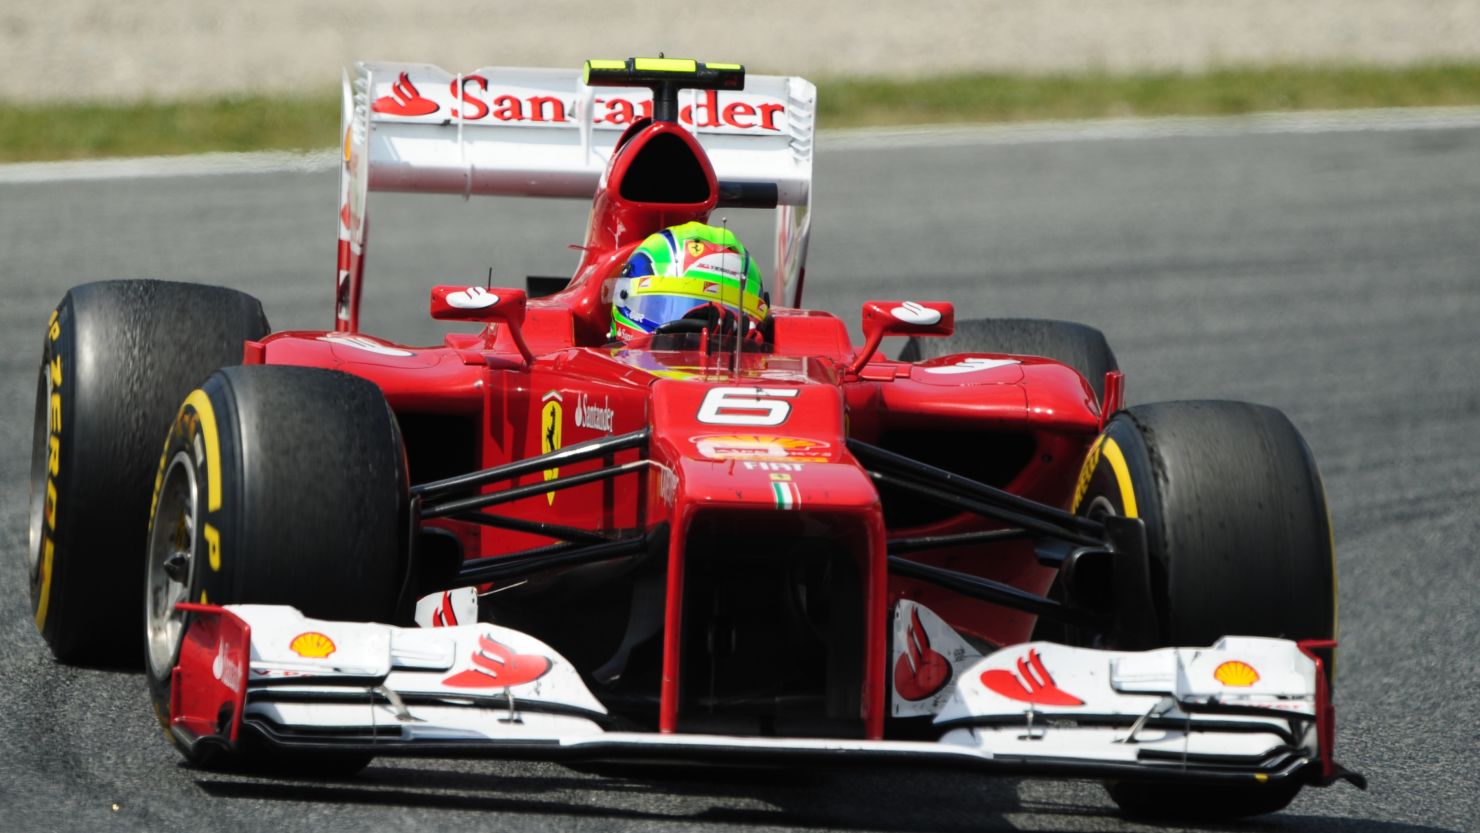 Brazilian driver Felipe Massa has won 11 grands prix since making his Formula One debut in 2002.